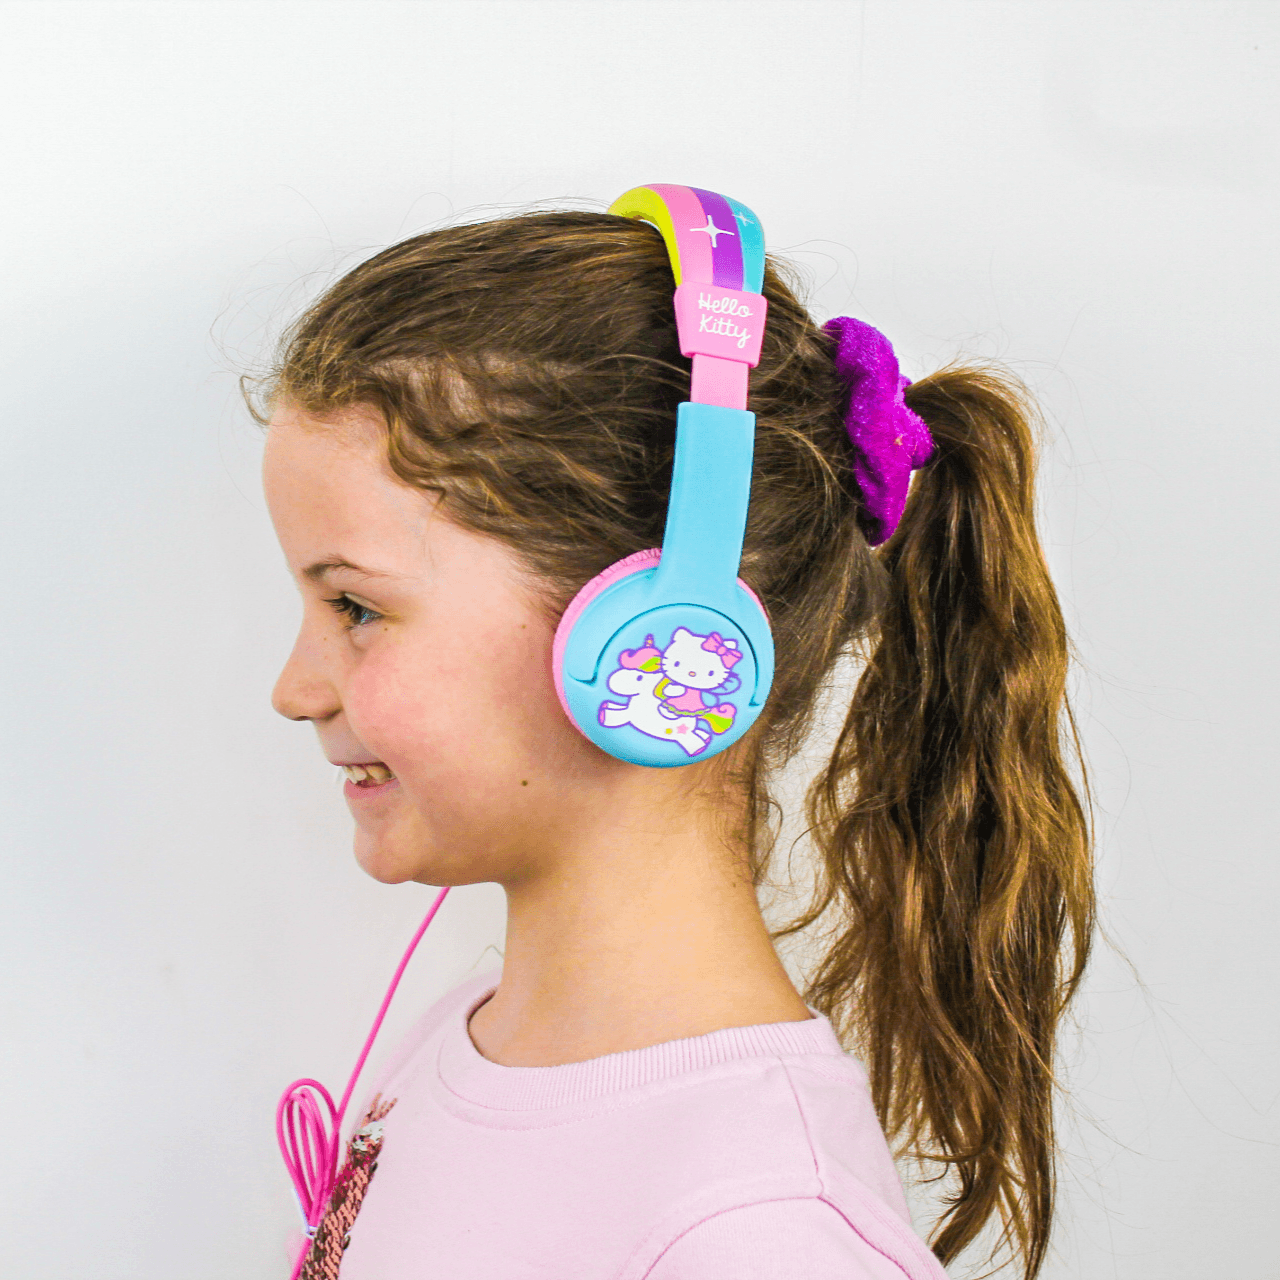 Hello Kitty Rainbow Unicorn Kids Headphones - childrensheadphones.co.uk